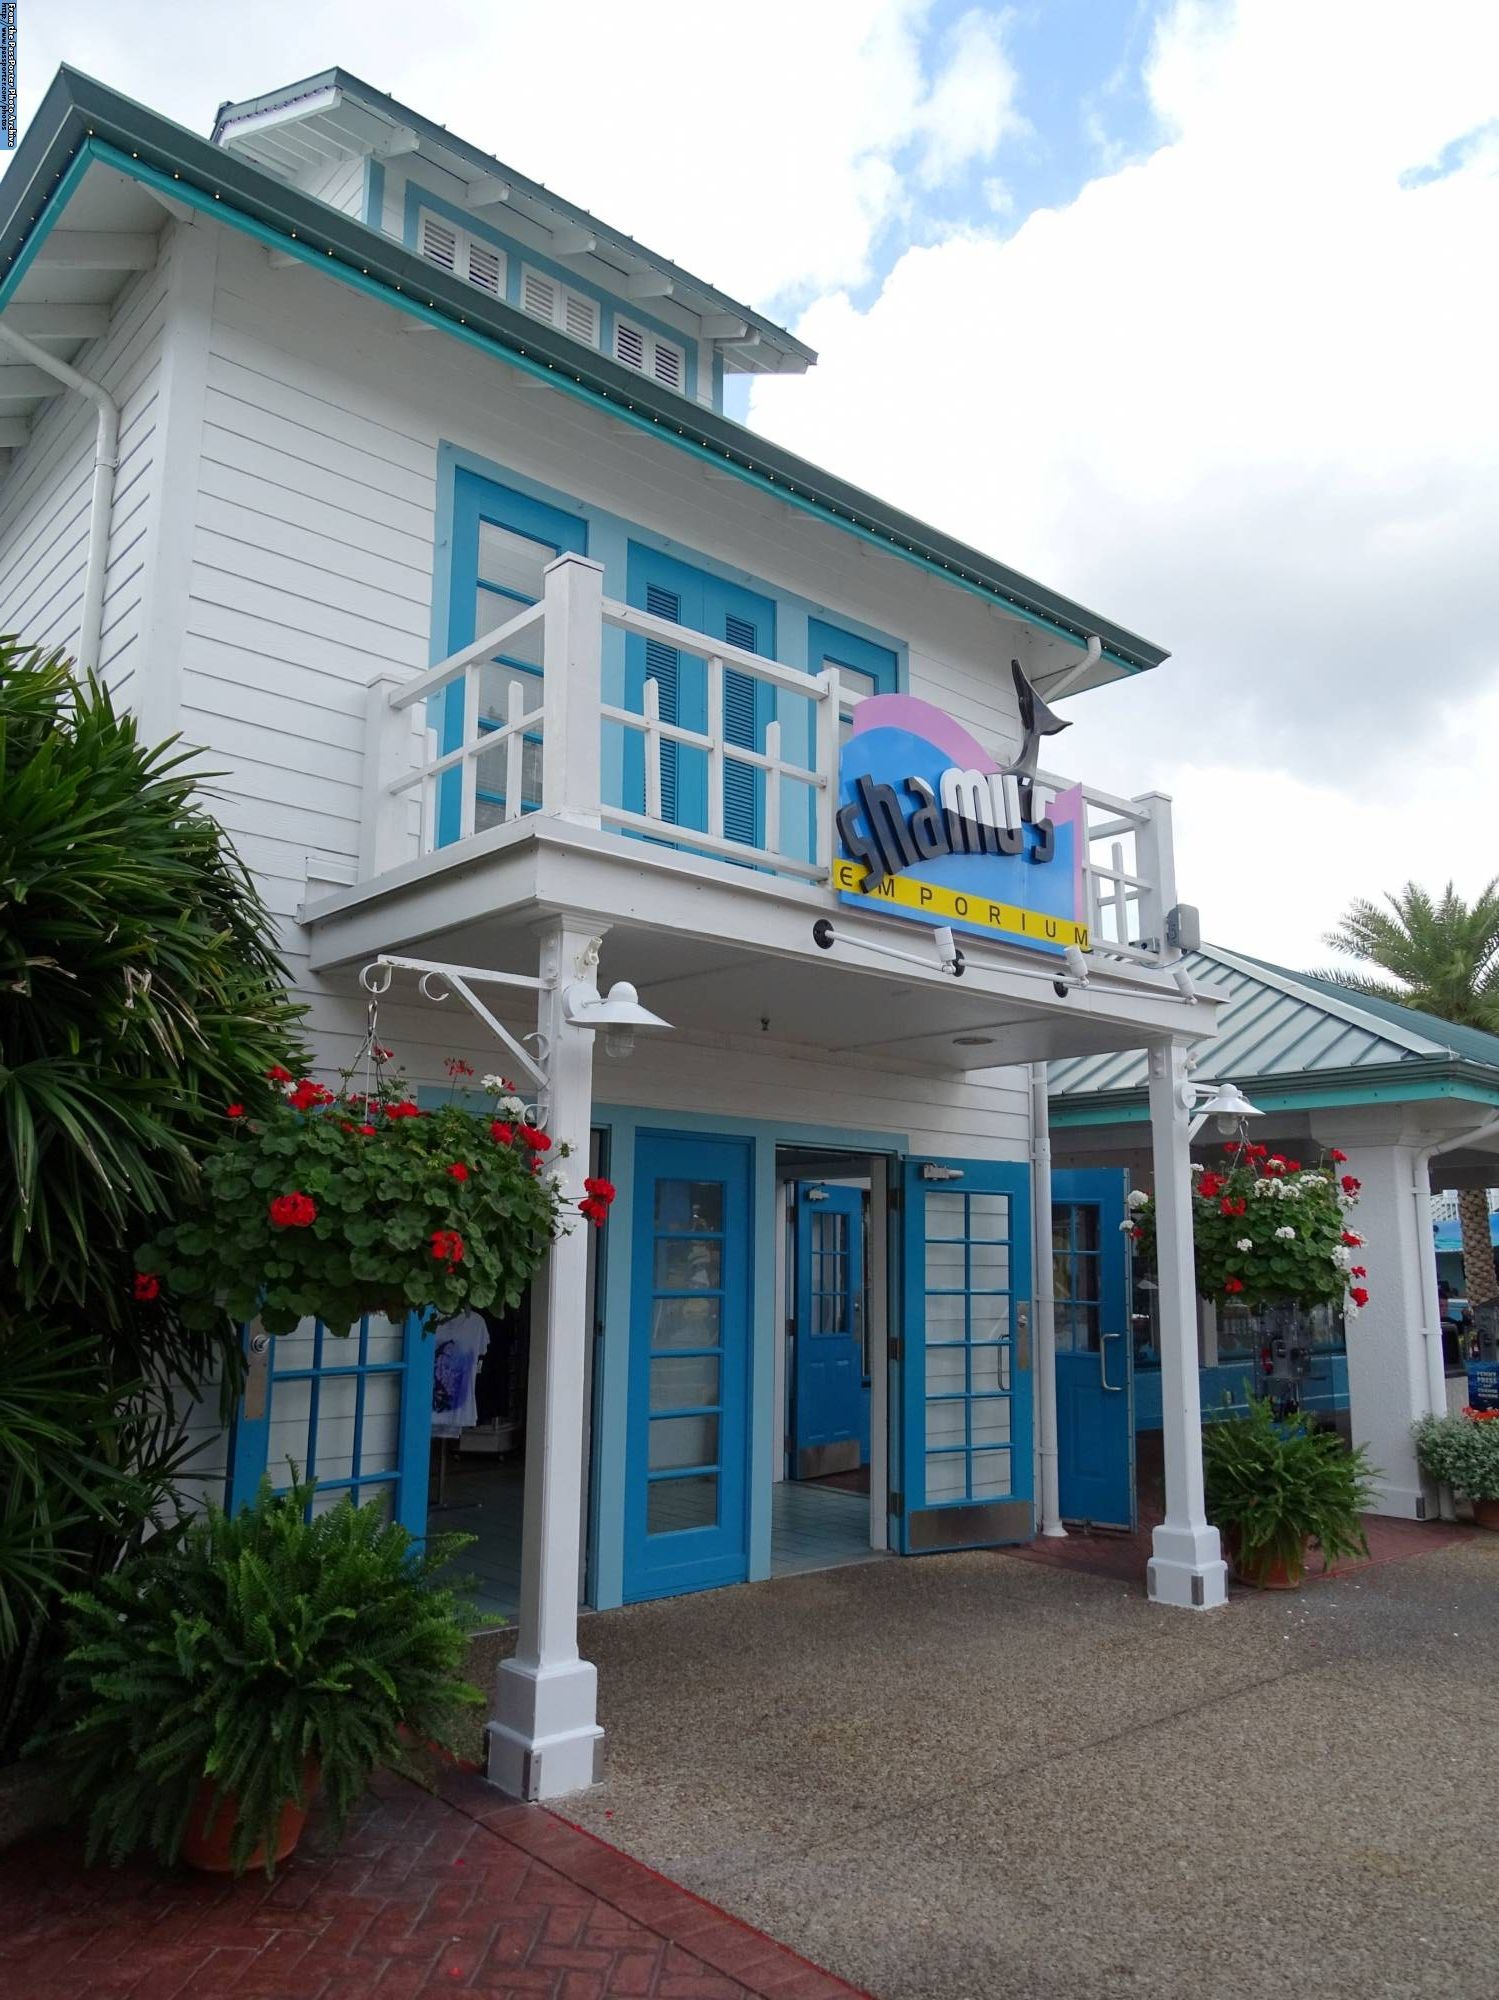 SeaWorld Orlando - Shamu's Emporium